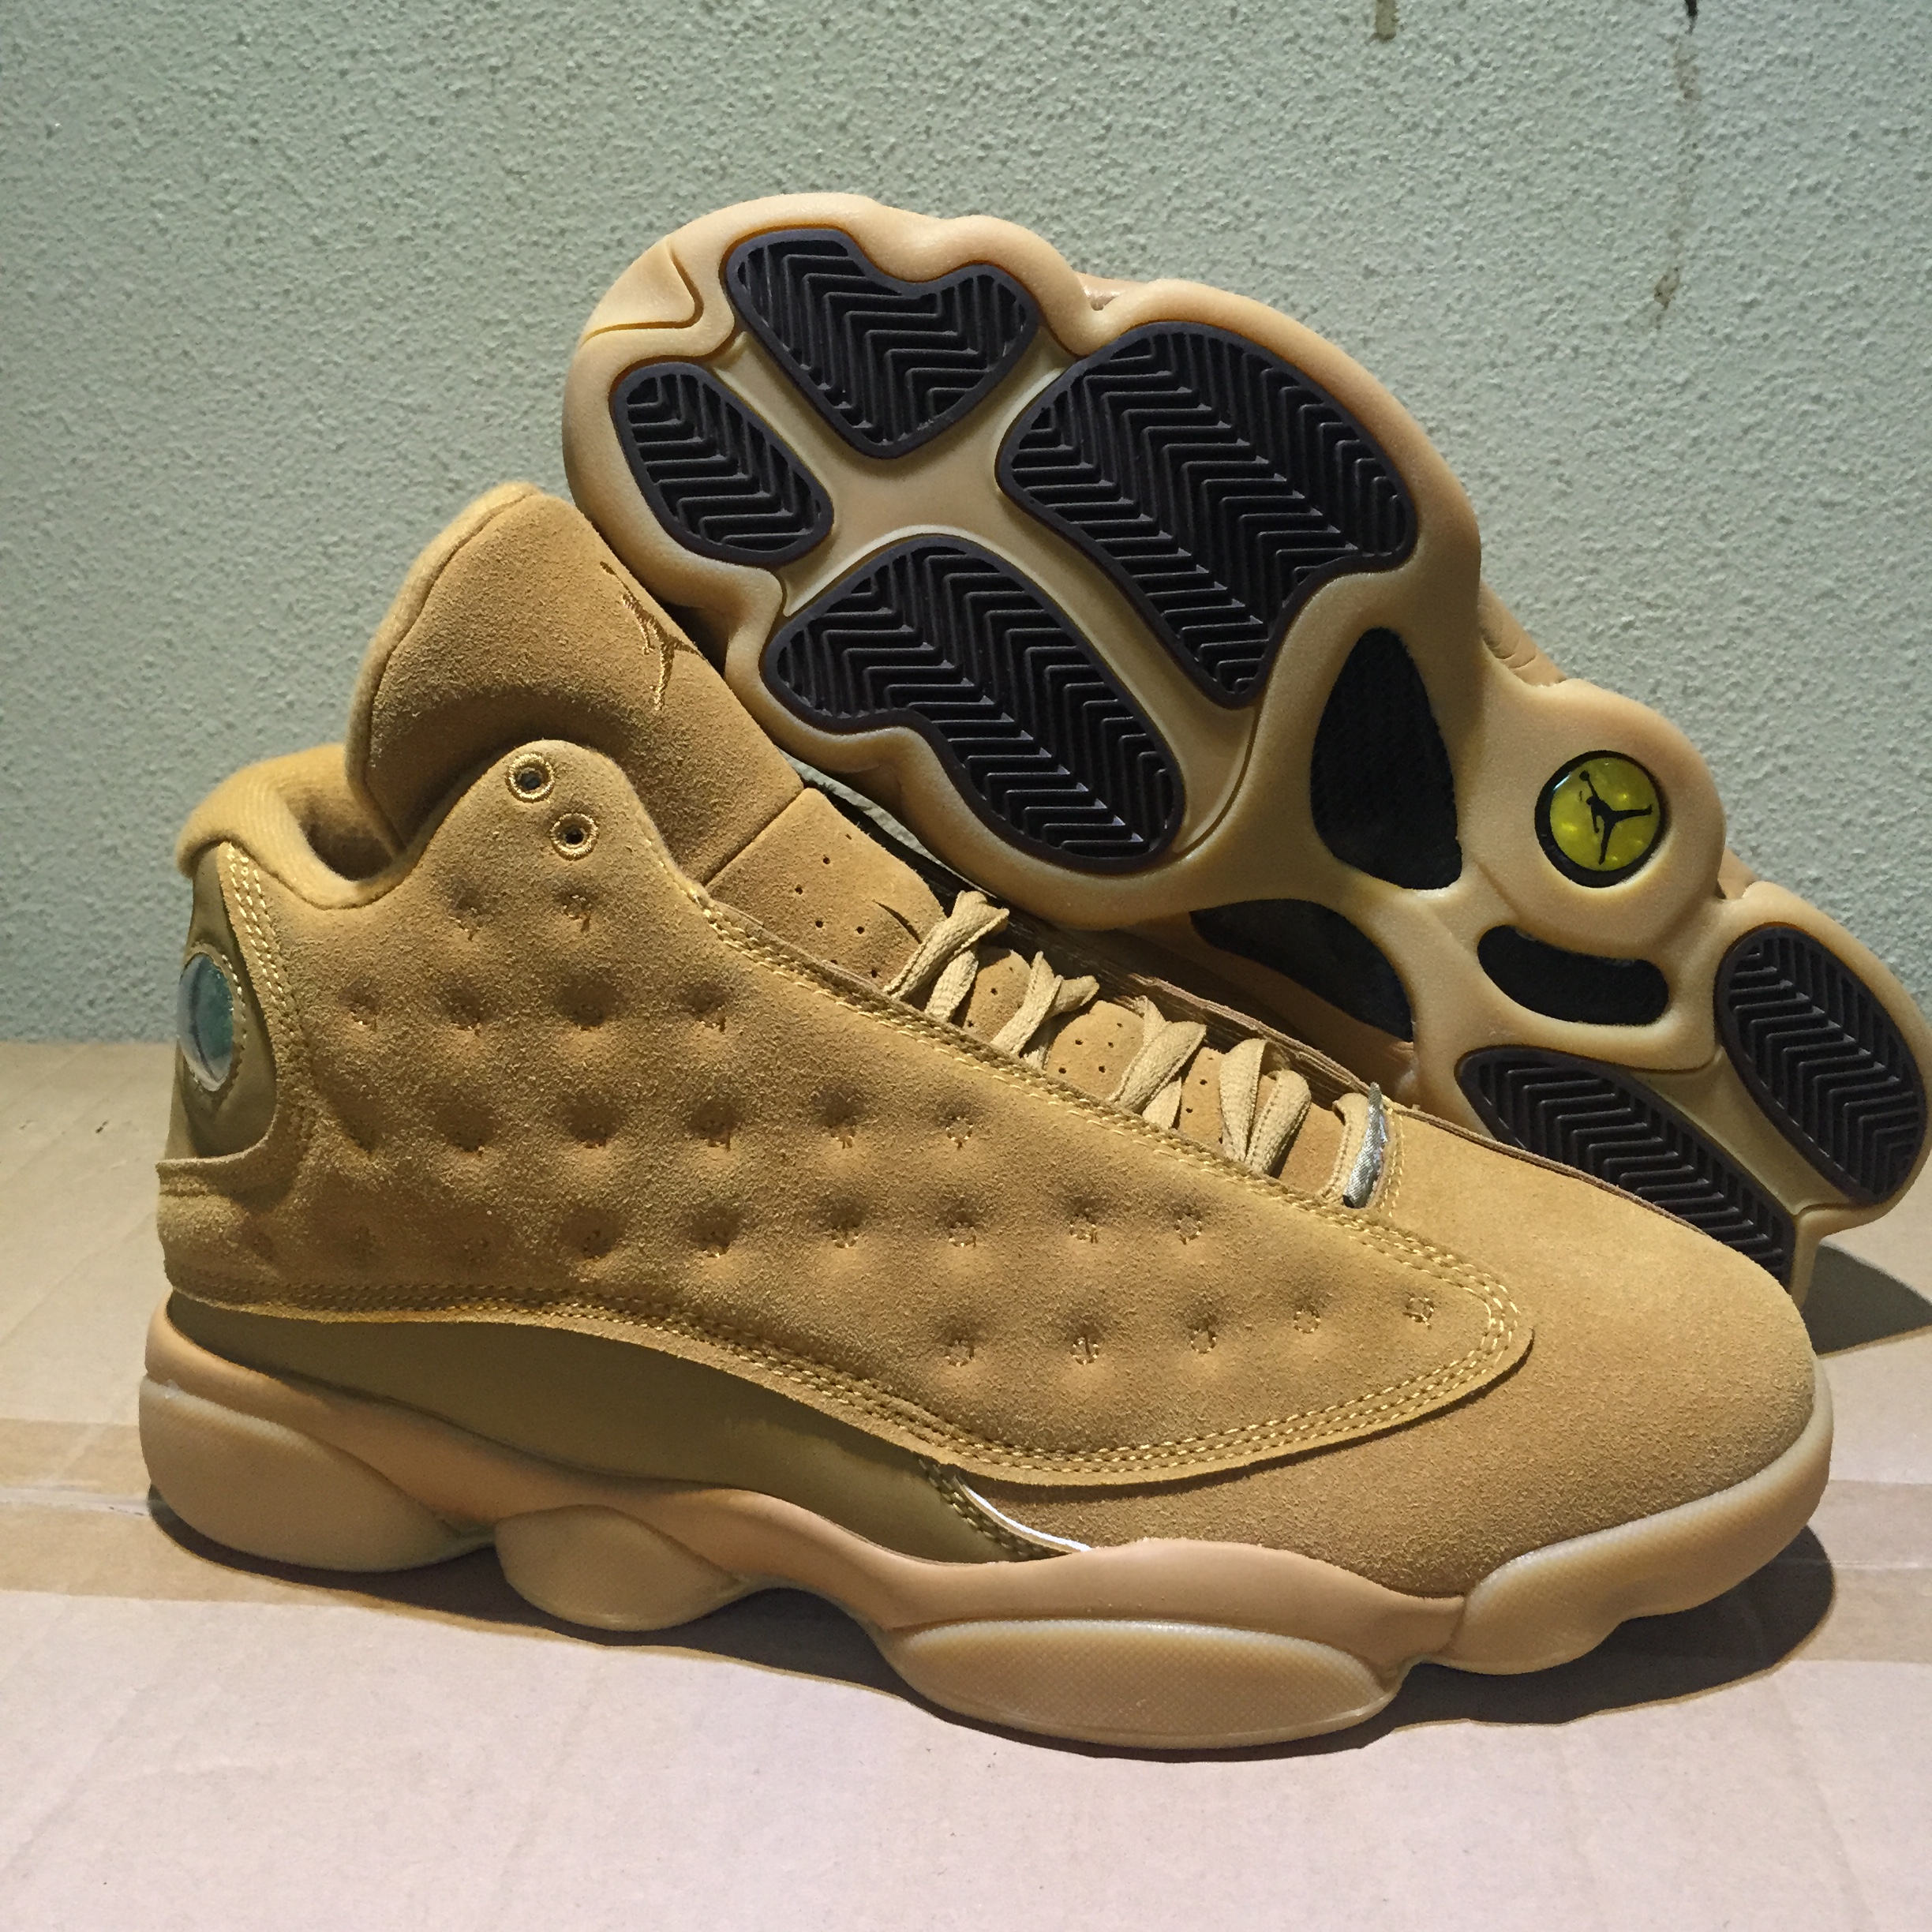 New Air Jordan 13 Wheat Yellow Shoes